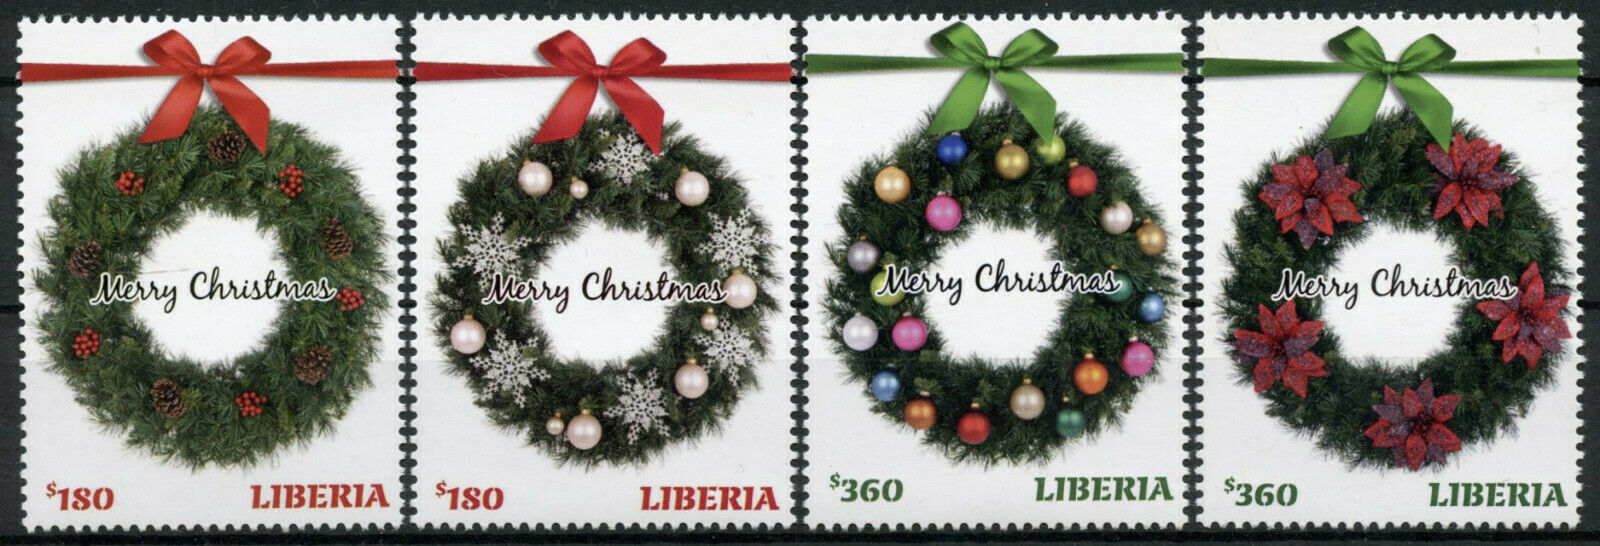 Liberia Christmas Stamps 2016 MNH Wreaths Decorations Ornaments 4v Set